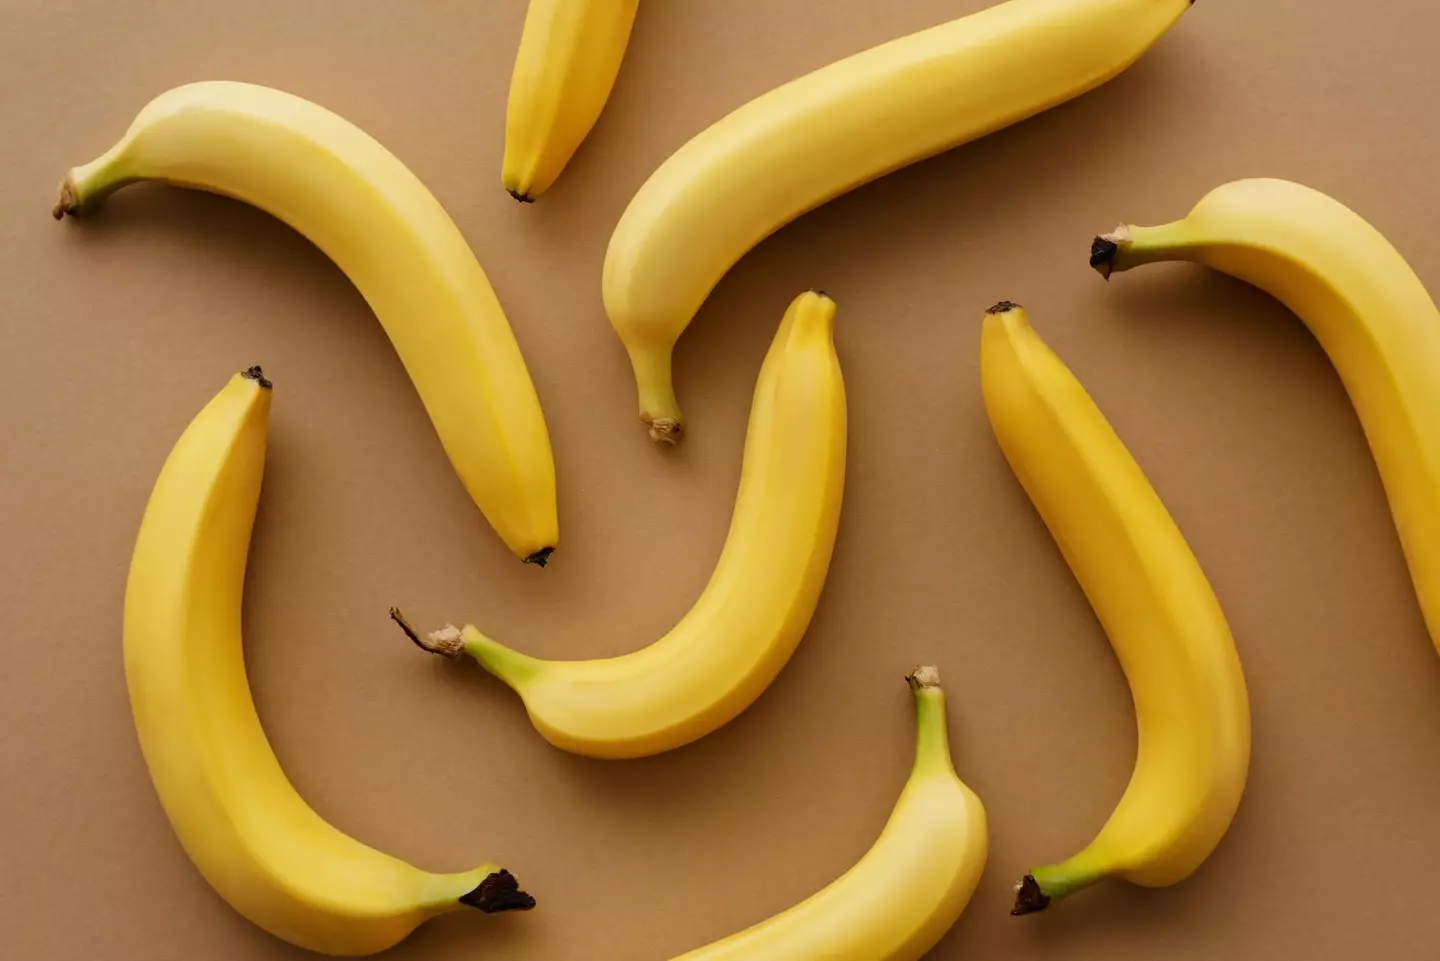 Panama disease is wiping out Cavendish bananas.